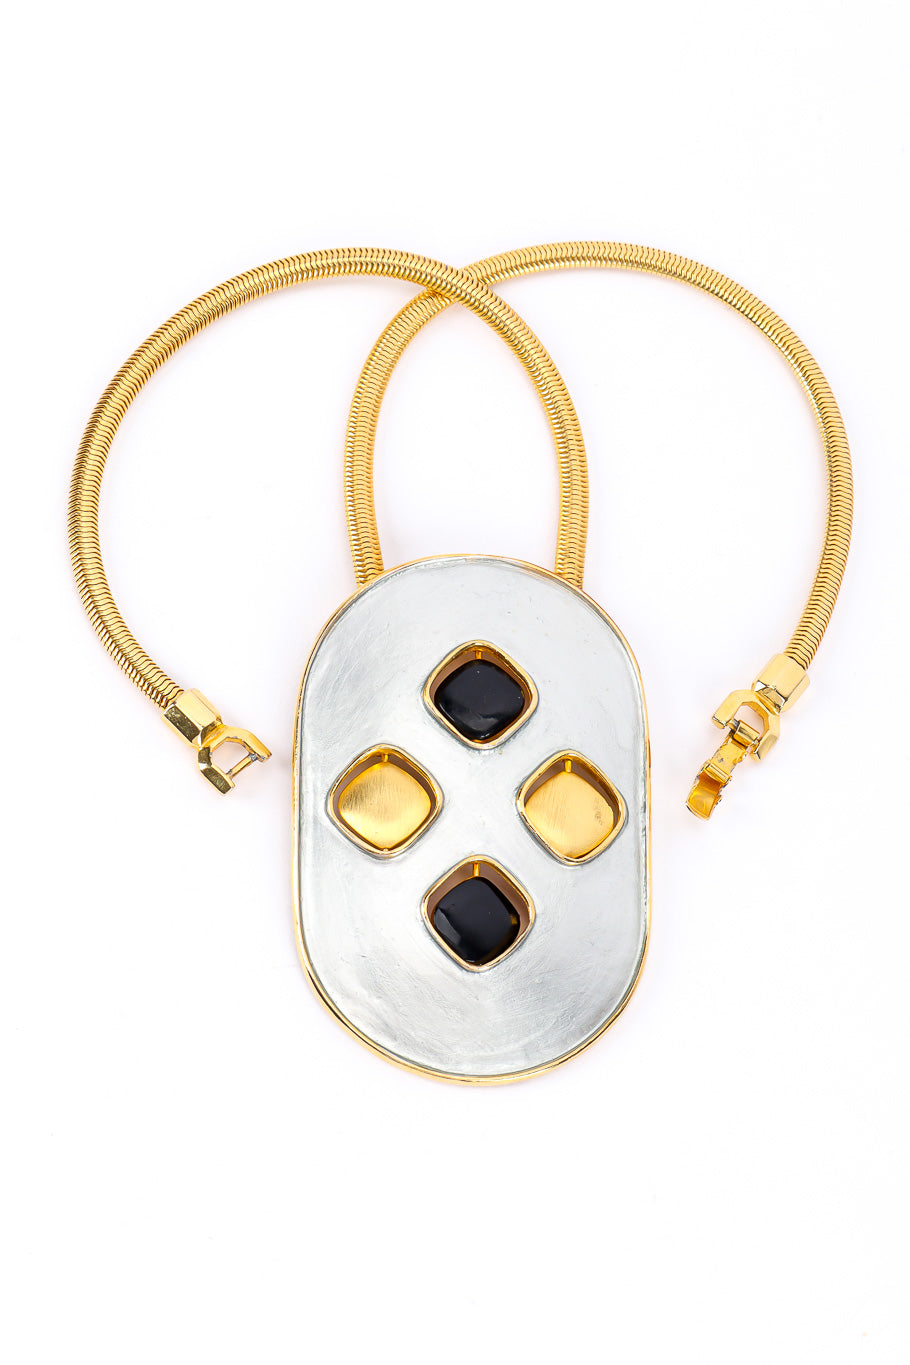 Vintage Pierre Cardin Revolving Charm Tablet Necklace different charm combination @Recessla